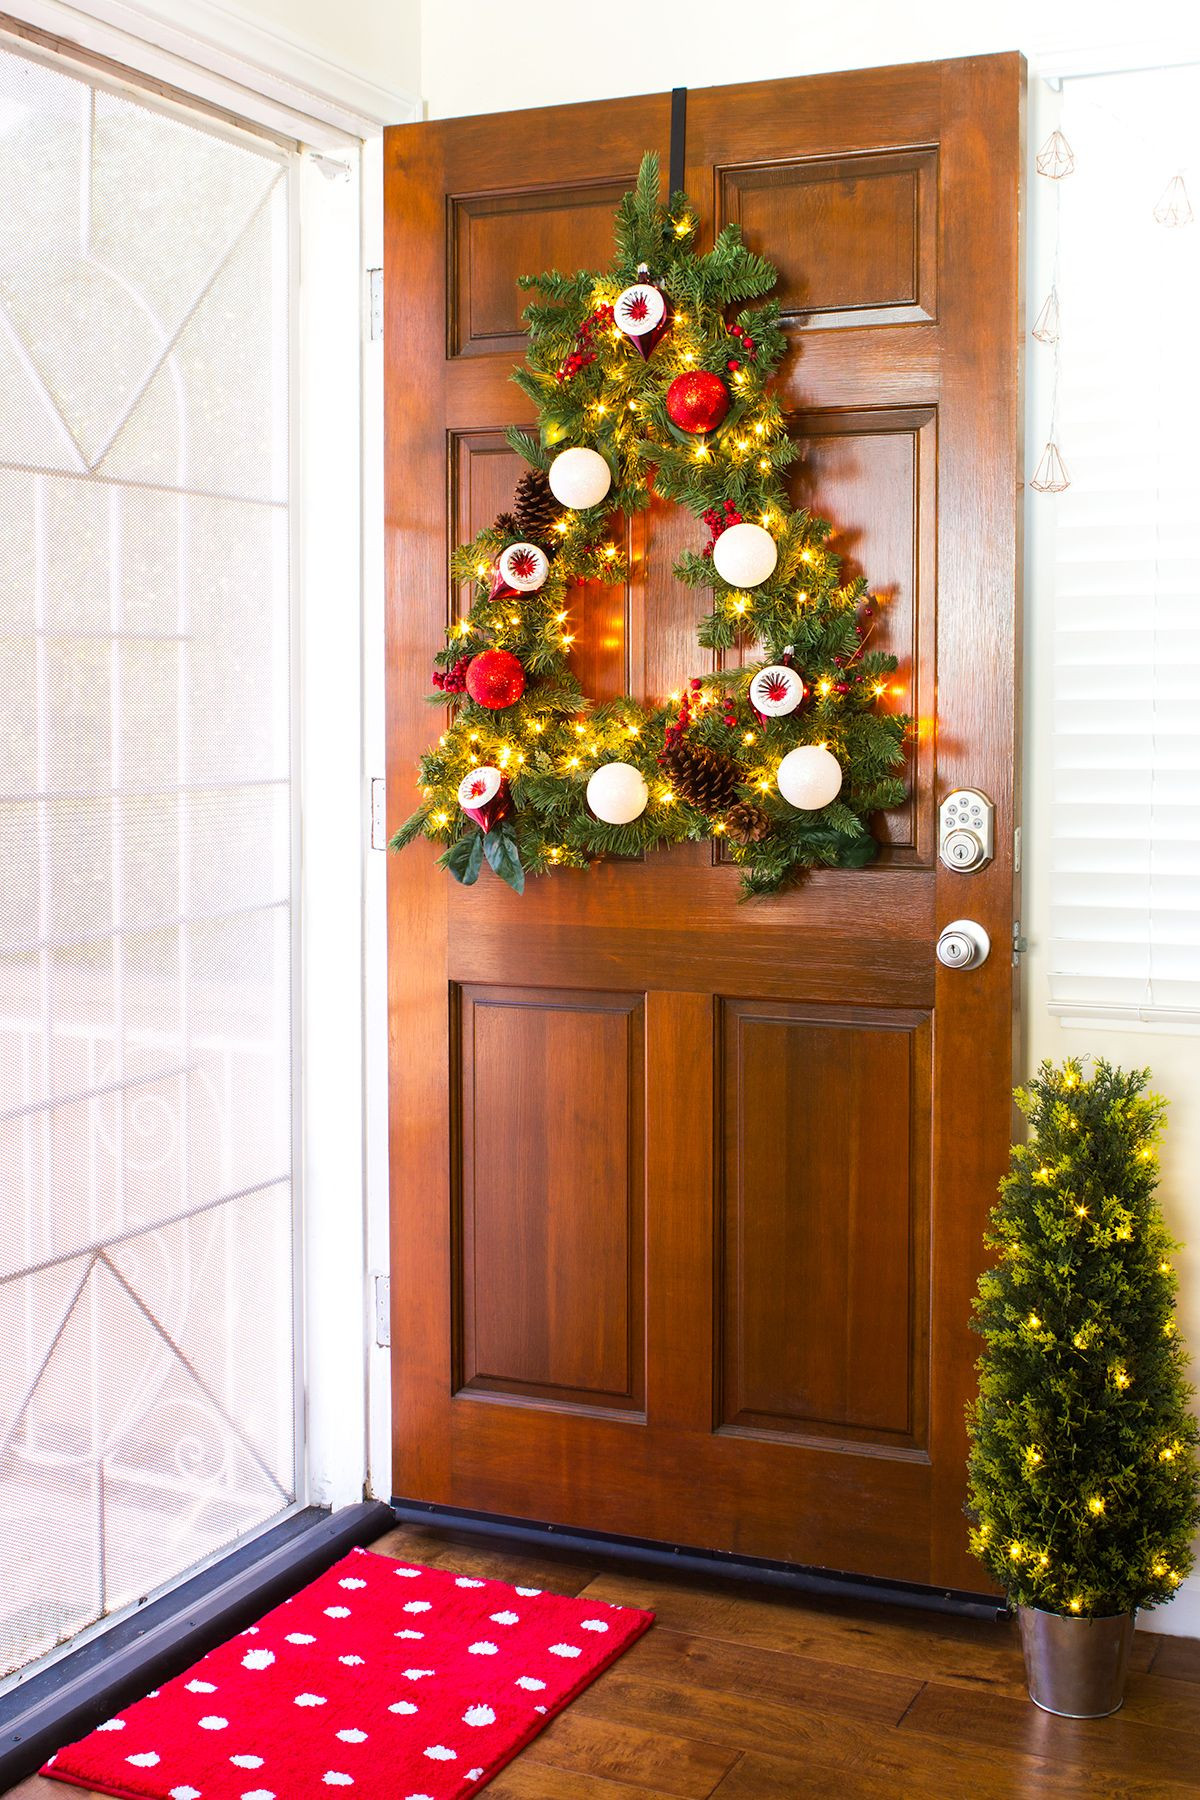 DIY Christmas Wreaths For Front Door
 DIY Tree Shaped Wreath